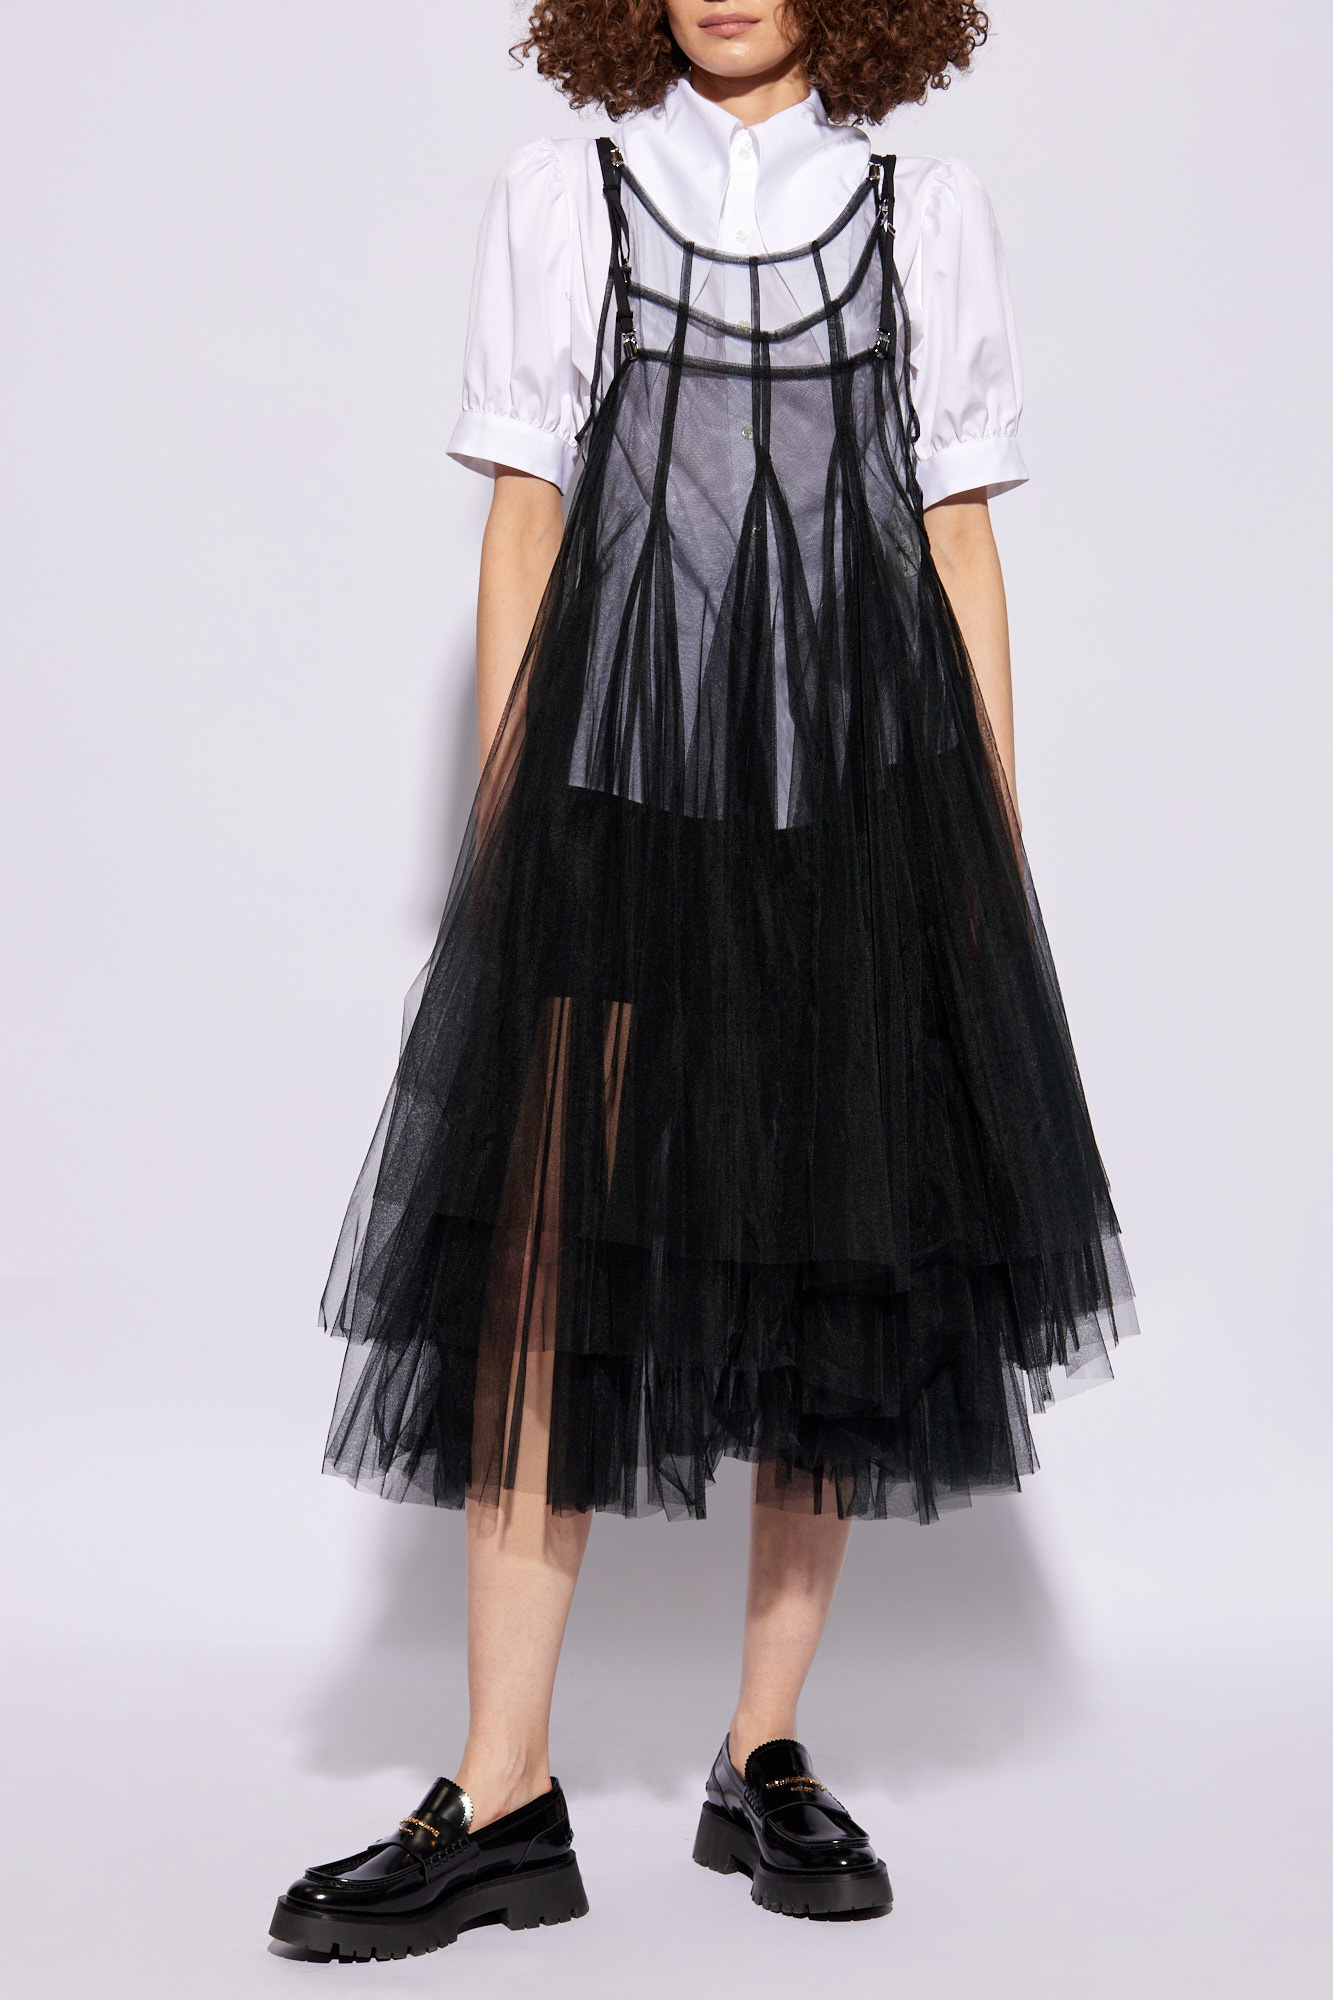 Black Tulle dress by Comme des Garçons Noir Kei Ninomiya Comme des 